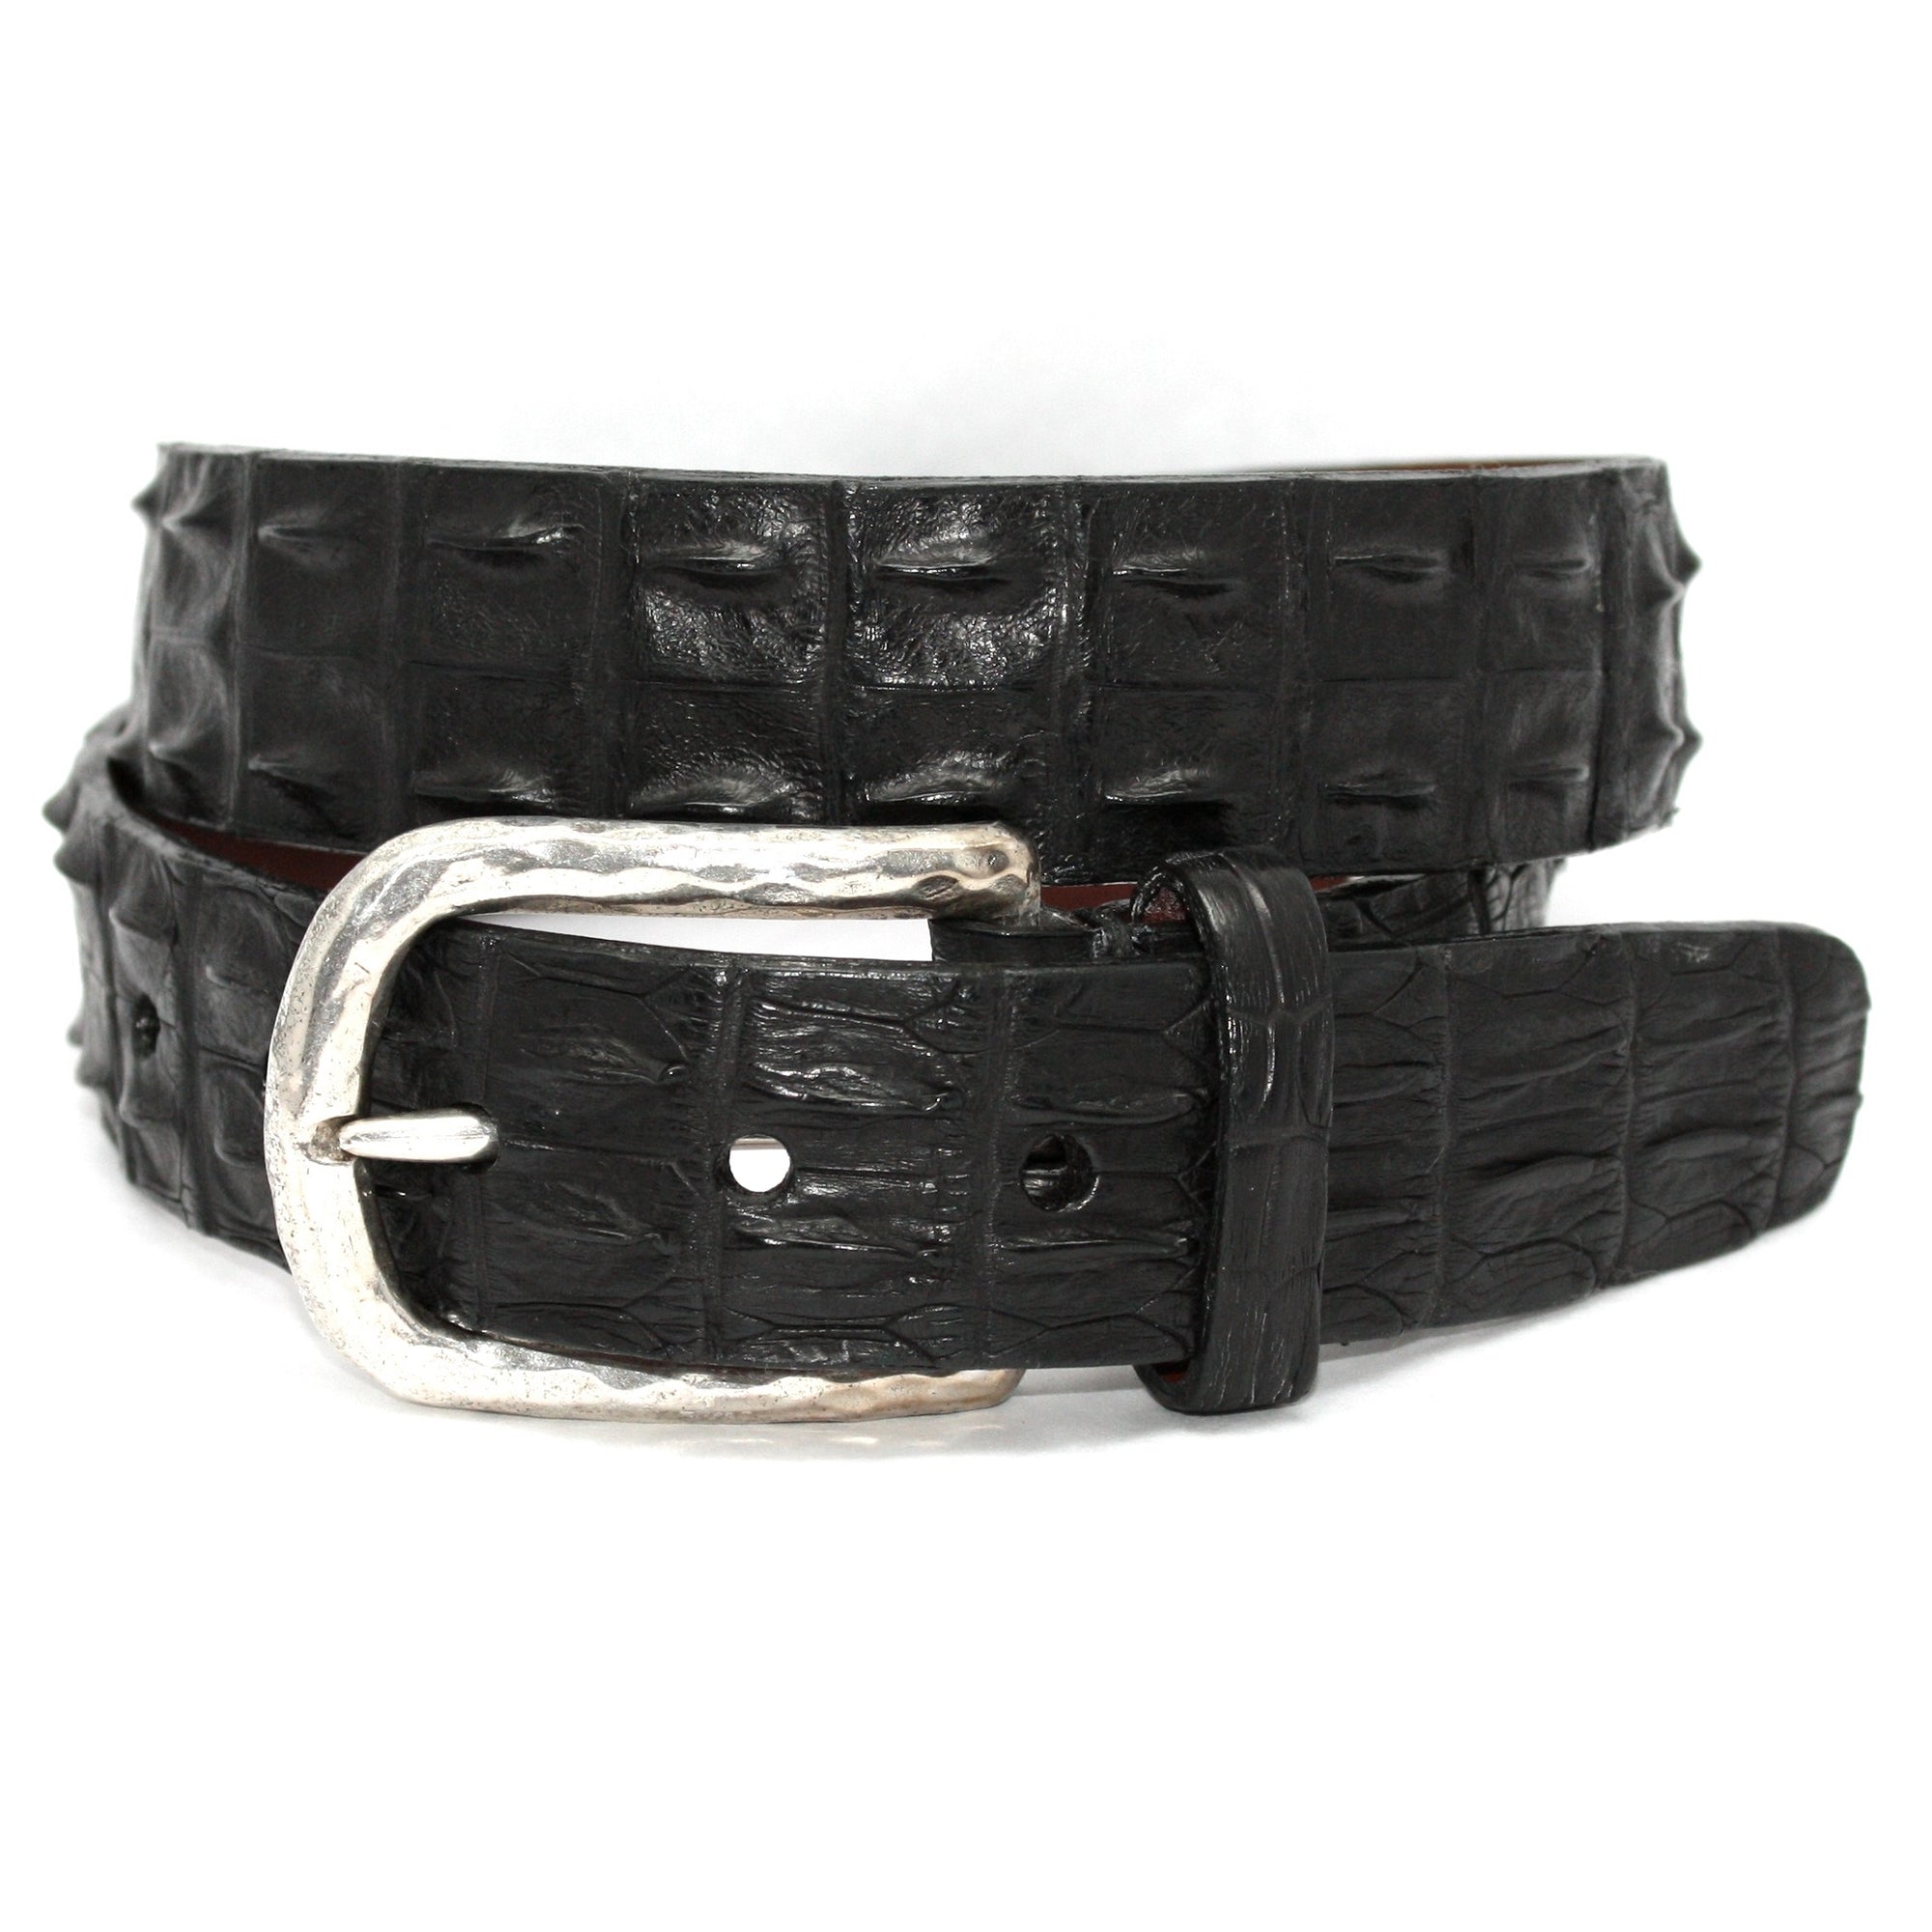 Hornback Crocodile Belt in Black by Torino Leather